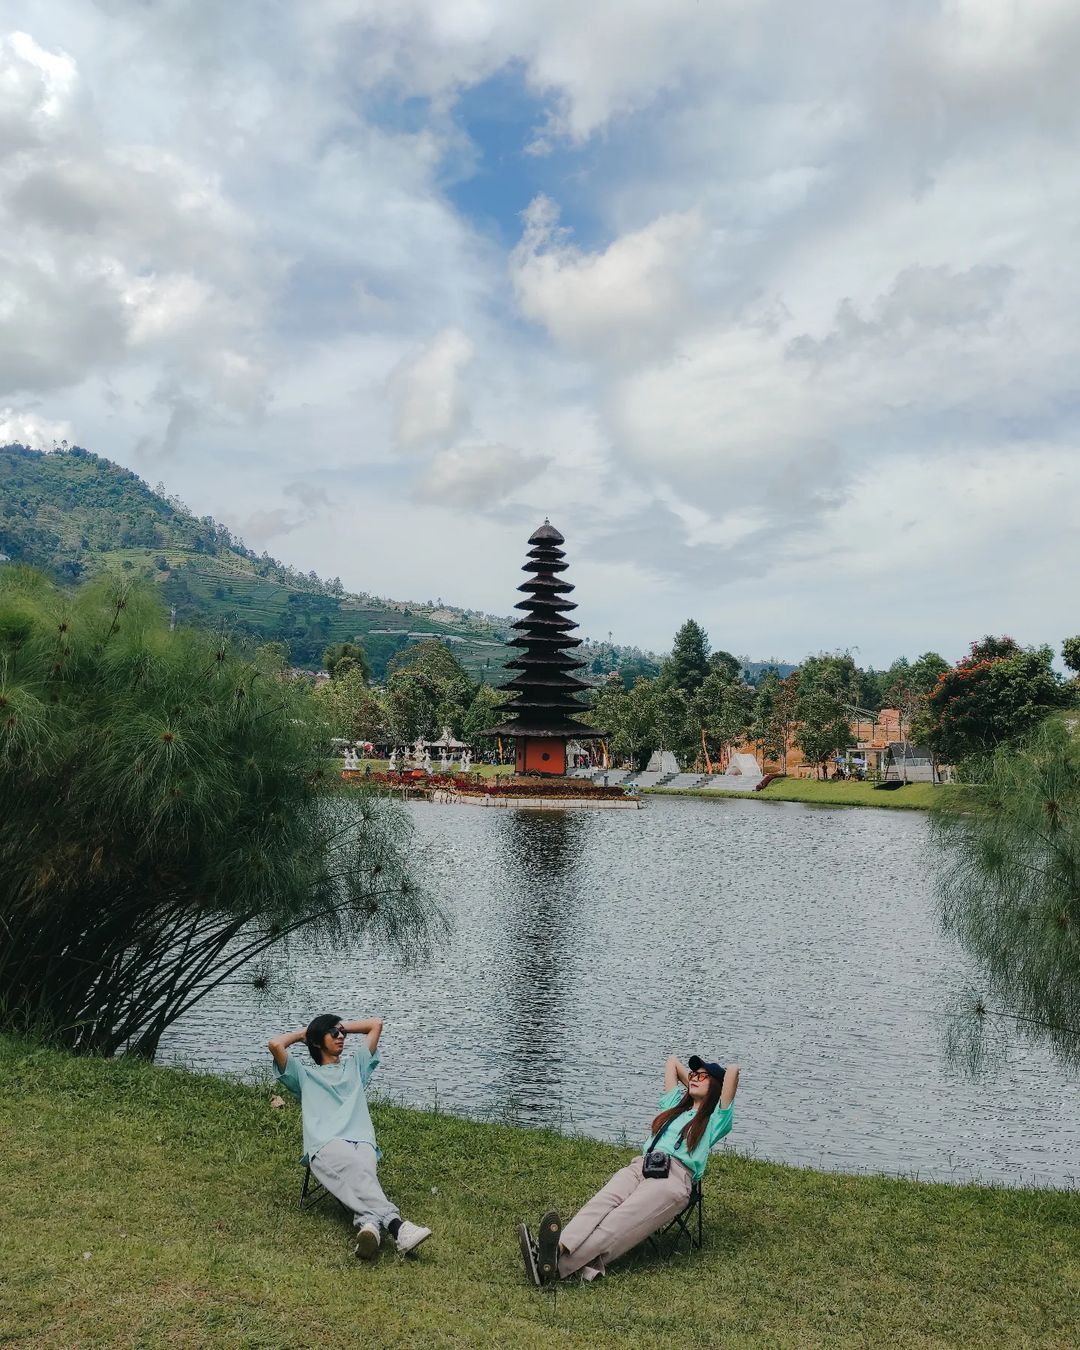 Harga Wahana Di Taman Lembah Dewata Bandung Image From @jennrizka